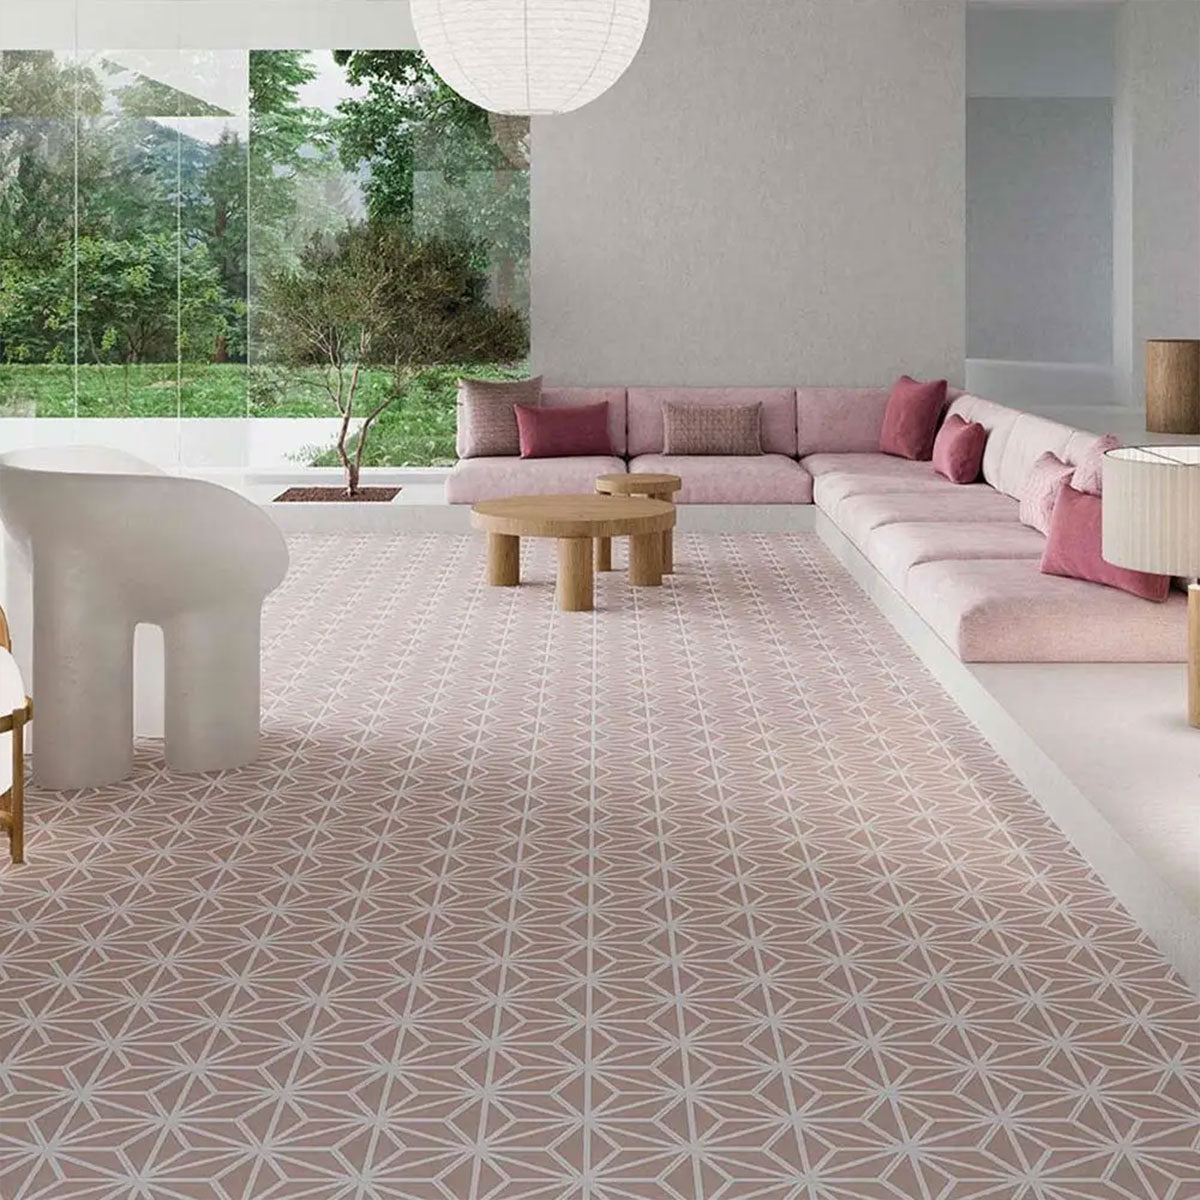 Varadero Rose Hexagonal Porcelain Tile Matt Feature 2